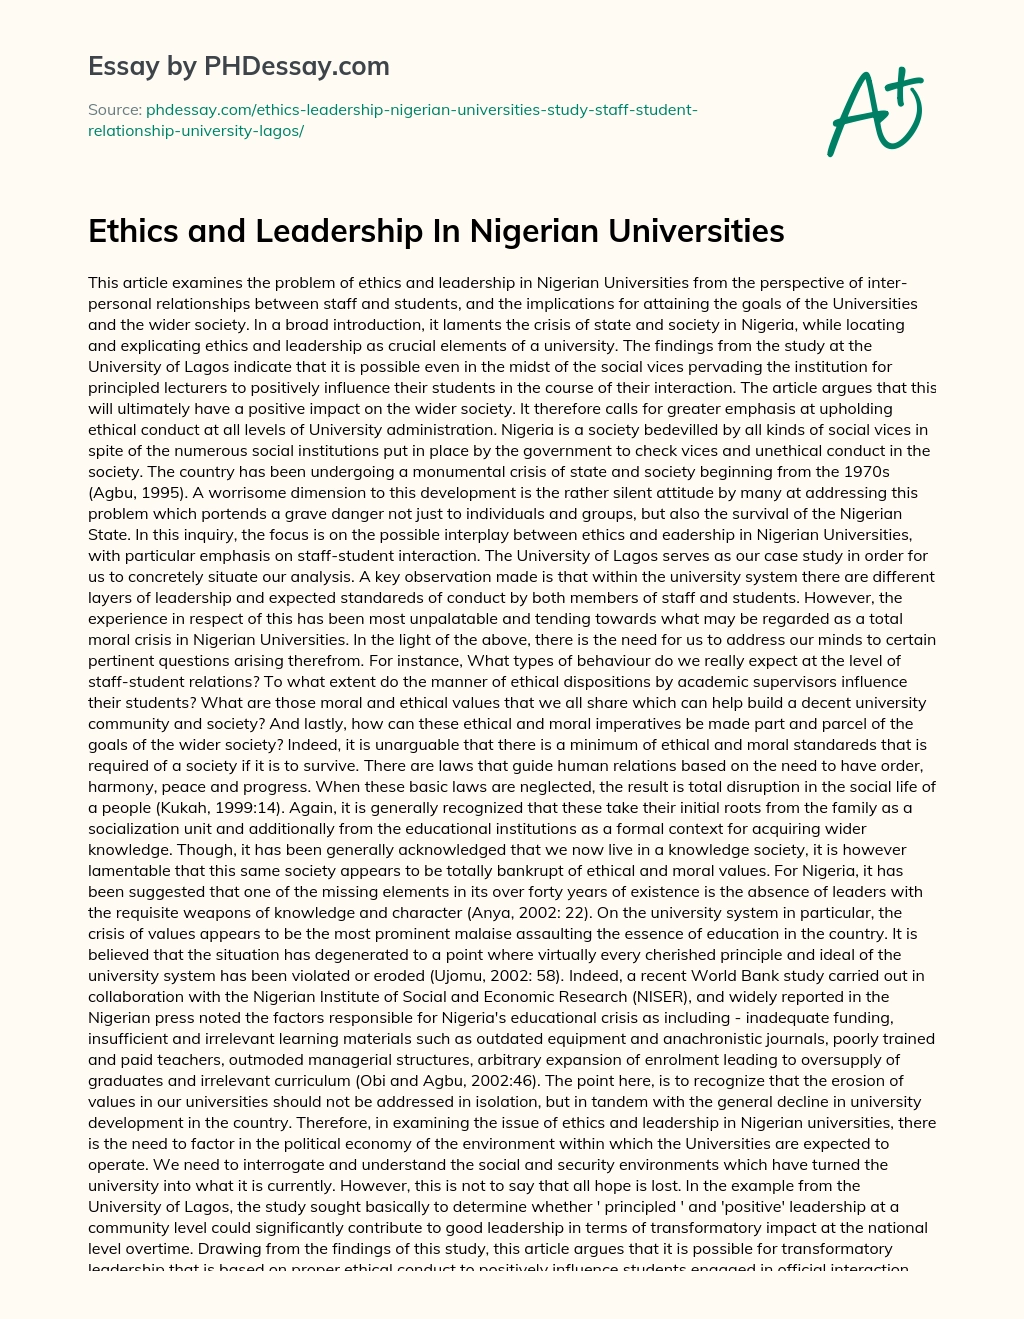 Ethics and Leadership In Nigerian Universities essay